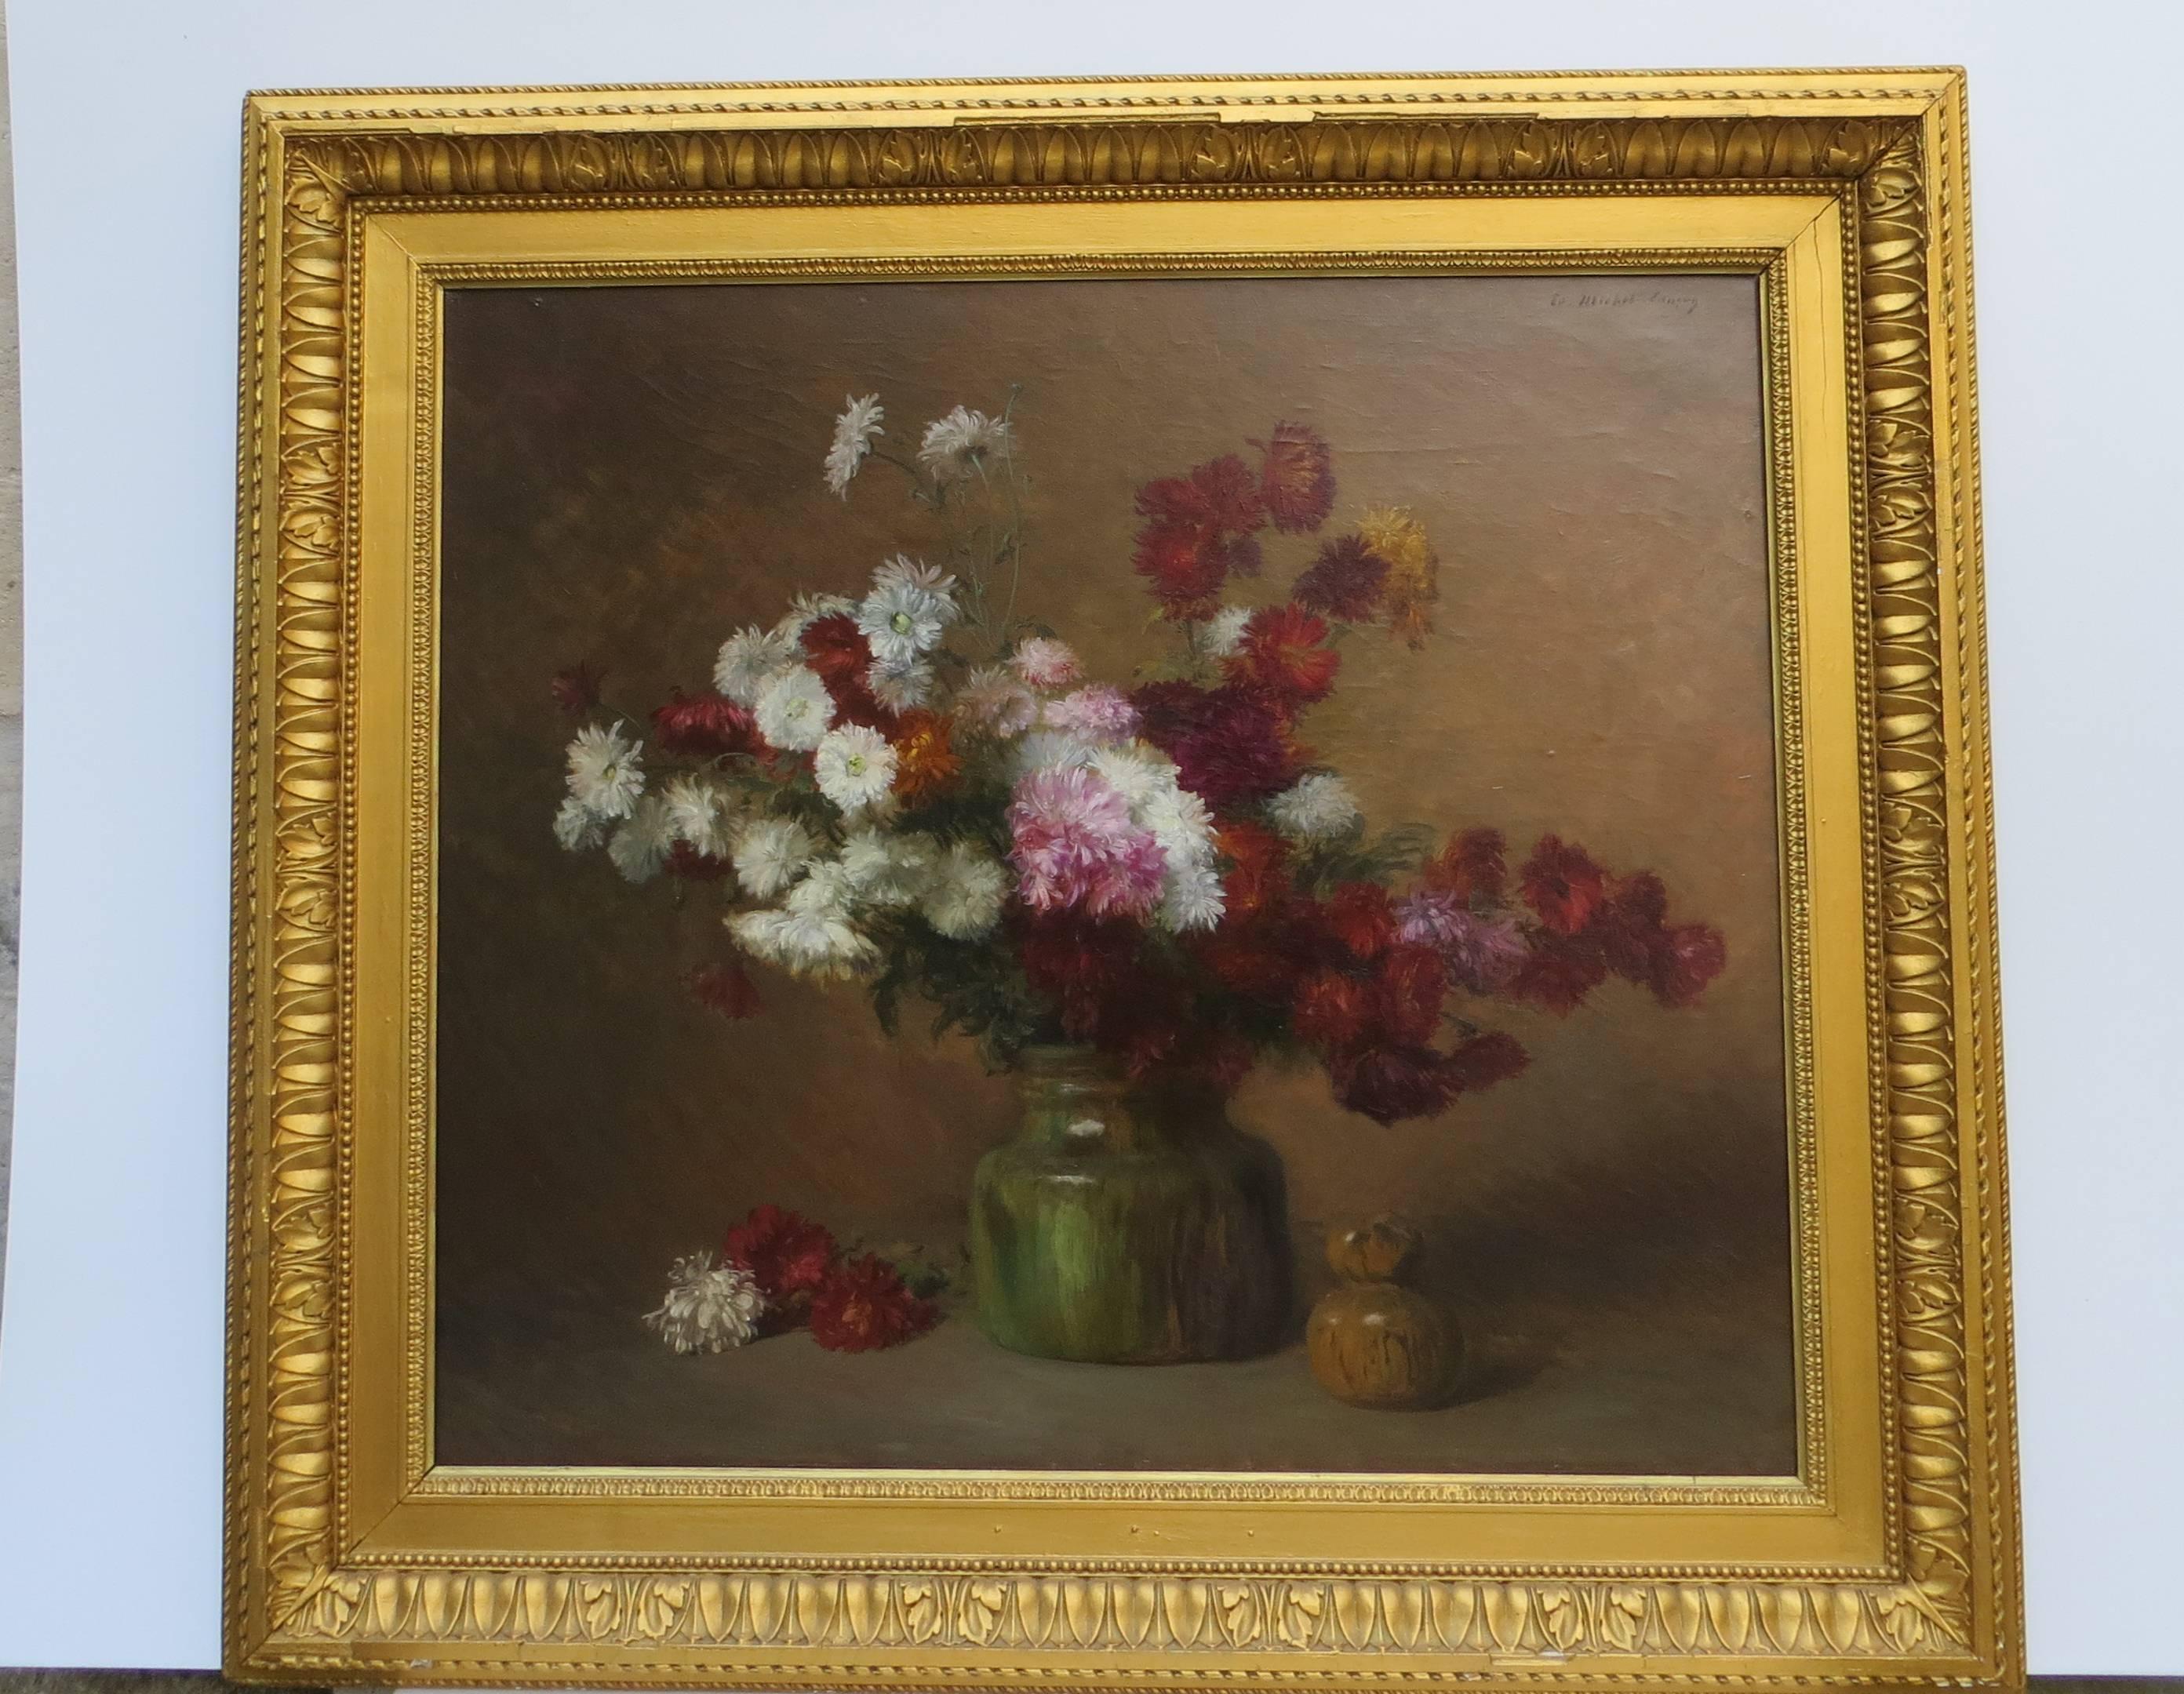 Flowers Stil-Life  - Painting by Edouard Michel Lançon